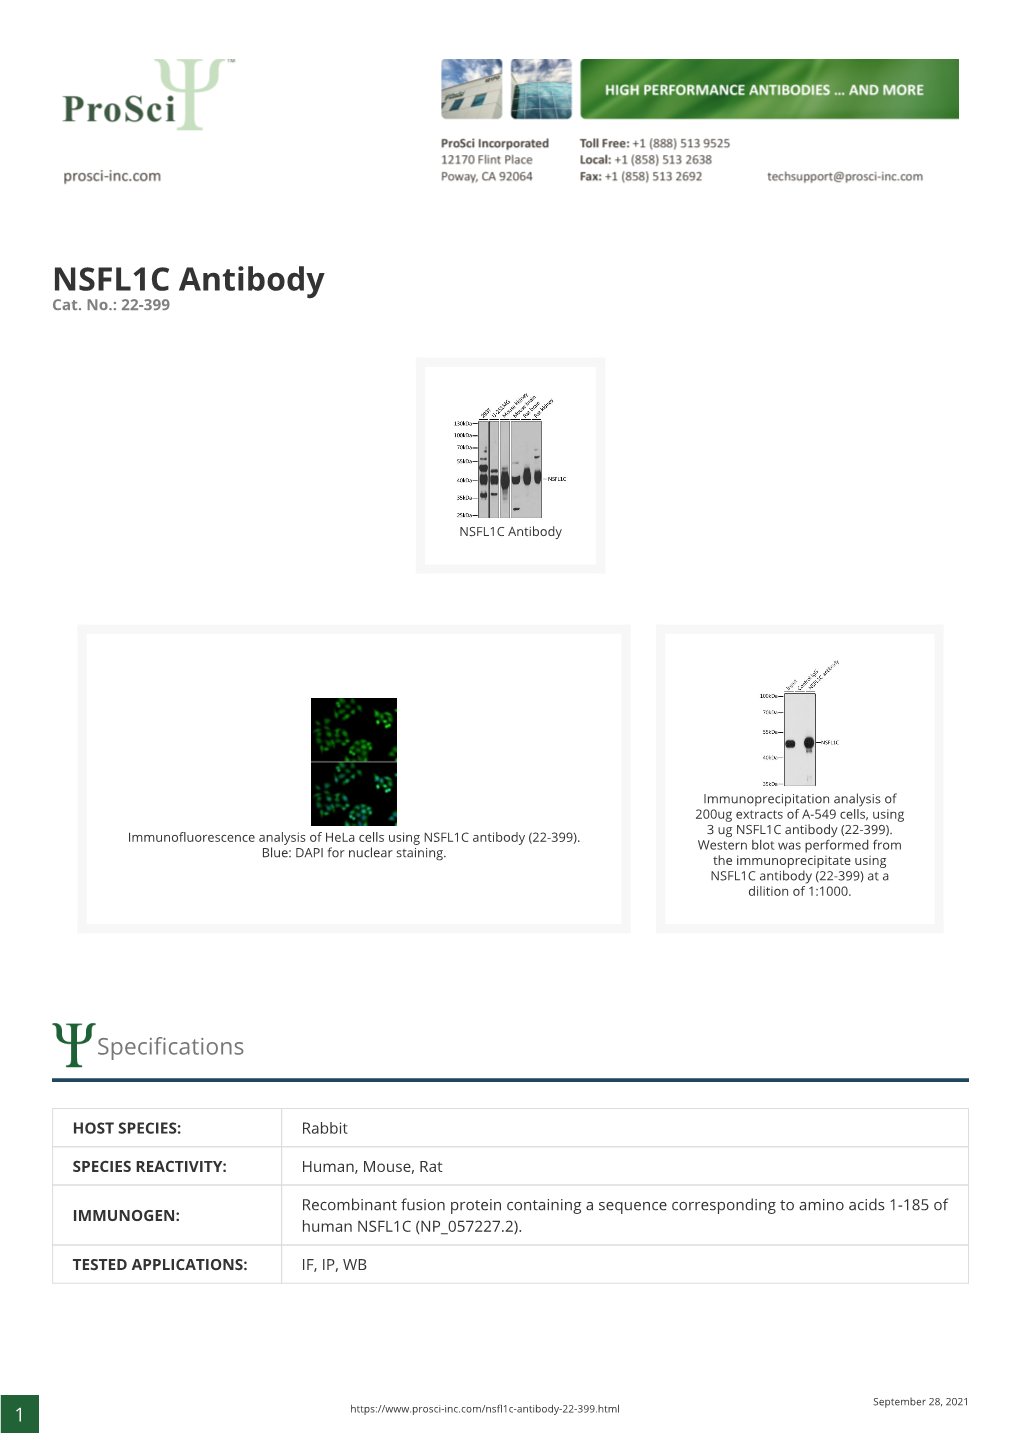 NSFL1C Antibody Cat